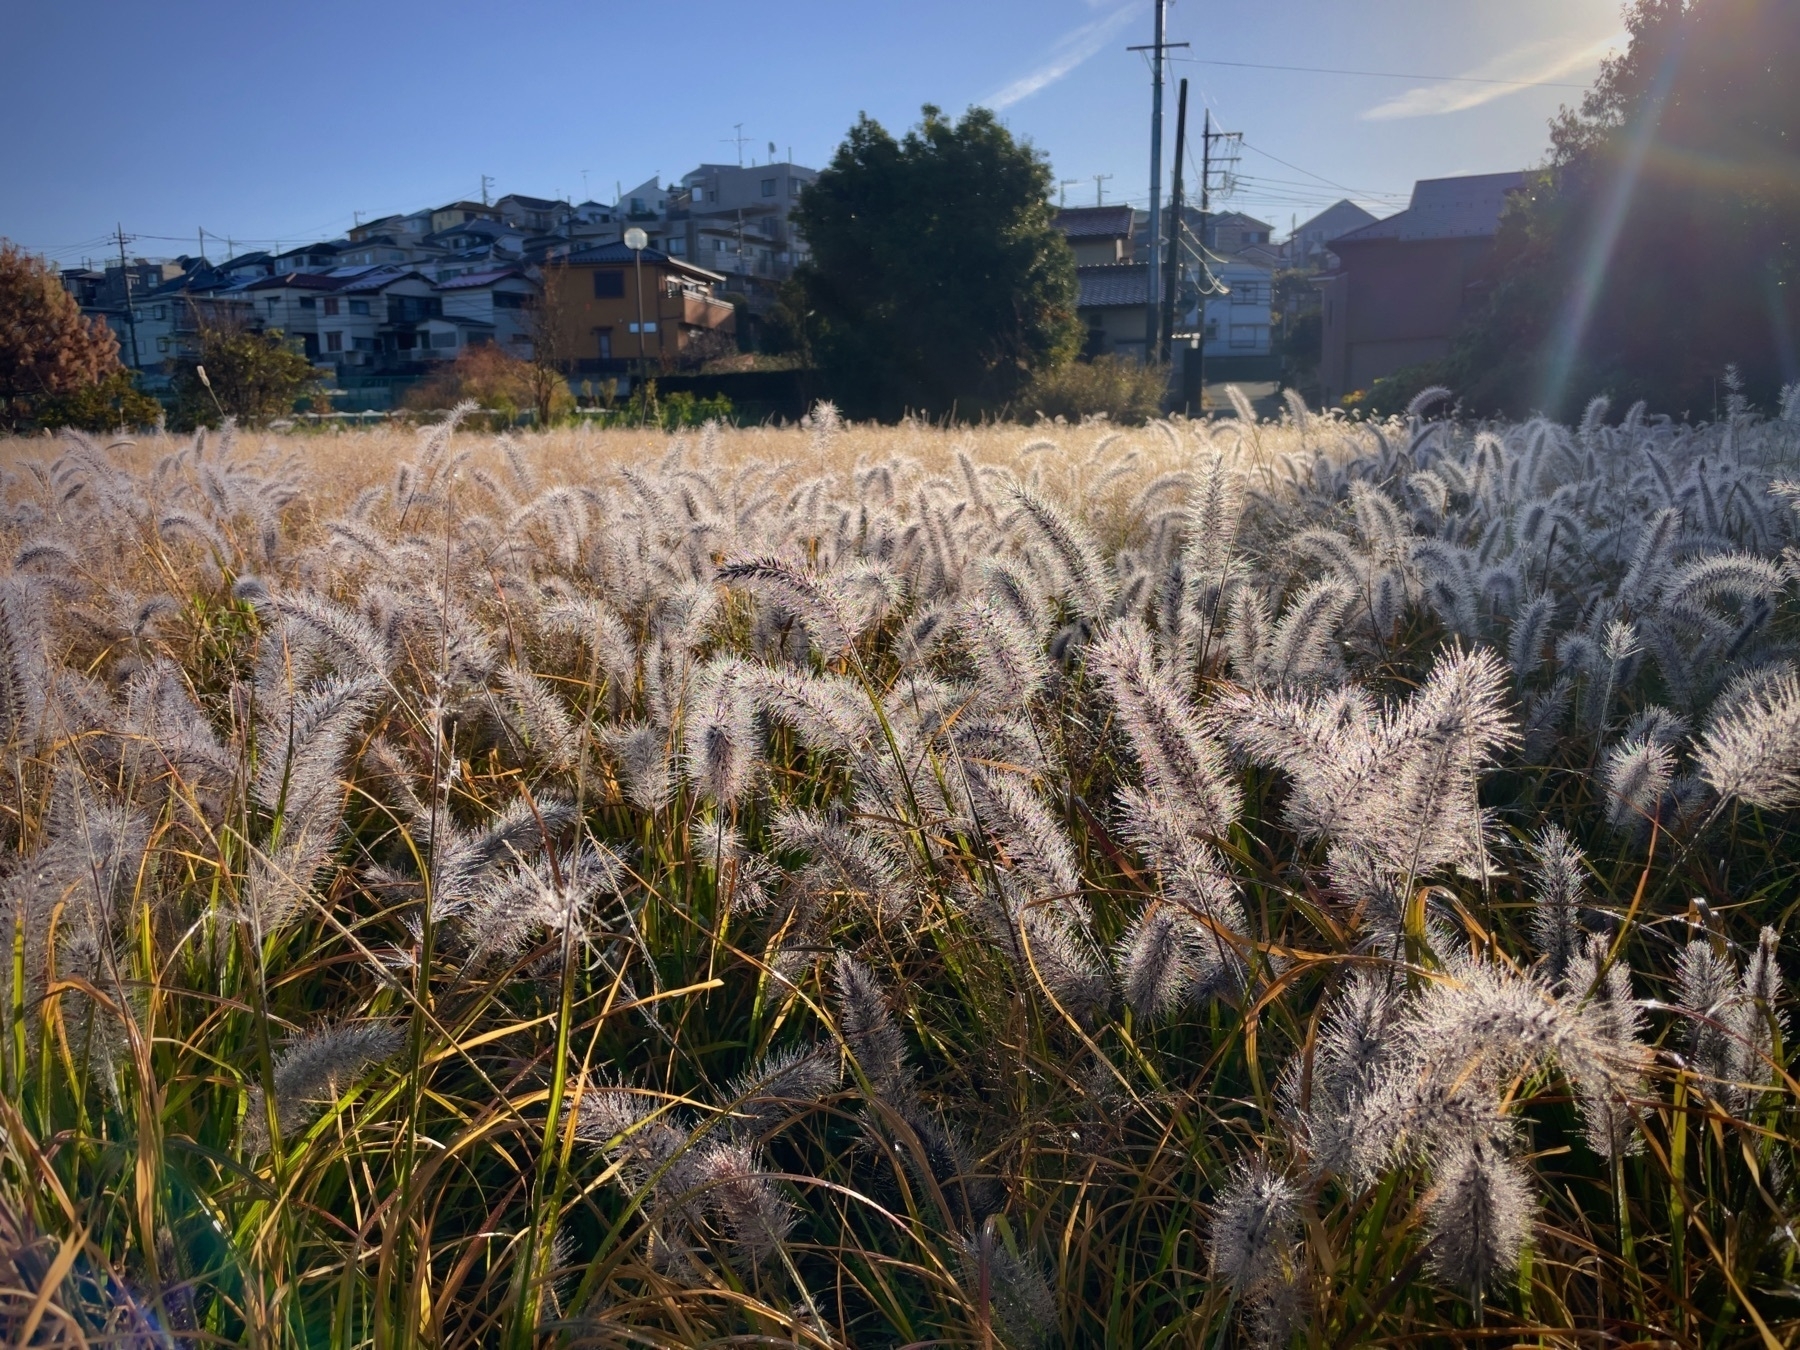 Photo of fall grasses in Yokohama Japan by Rick Cogley